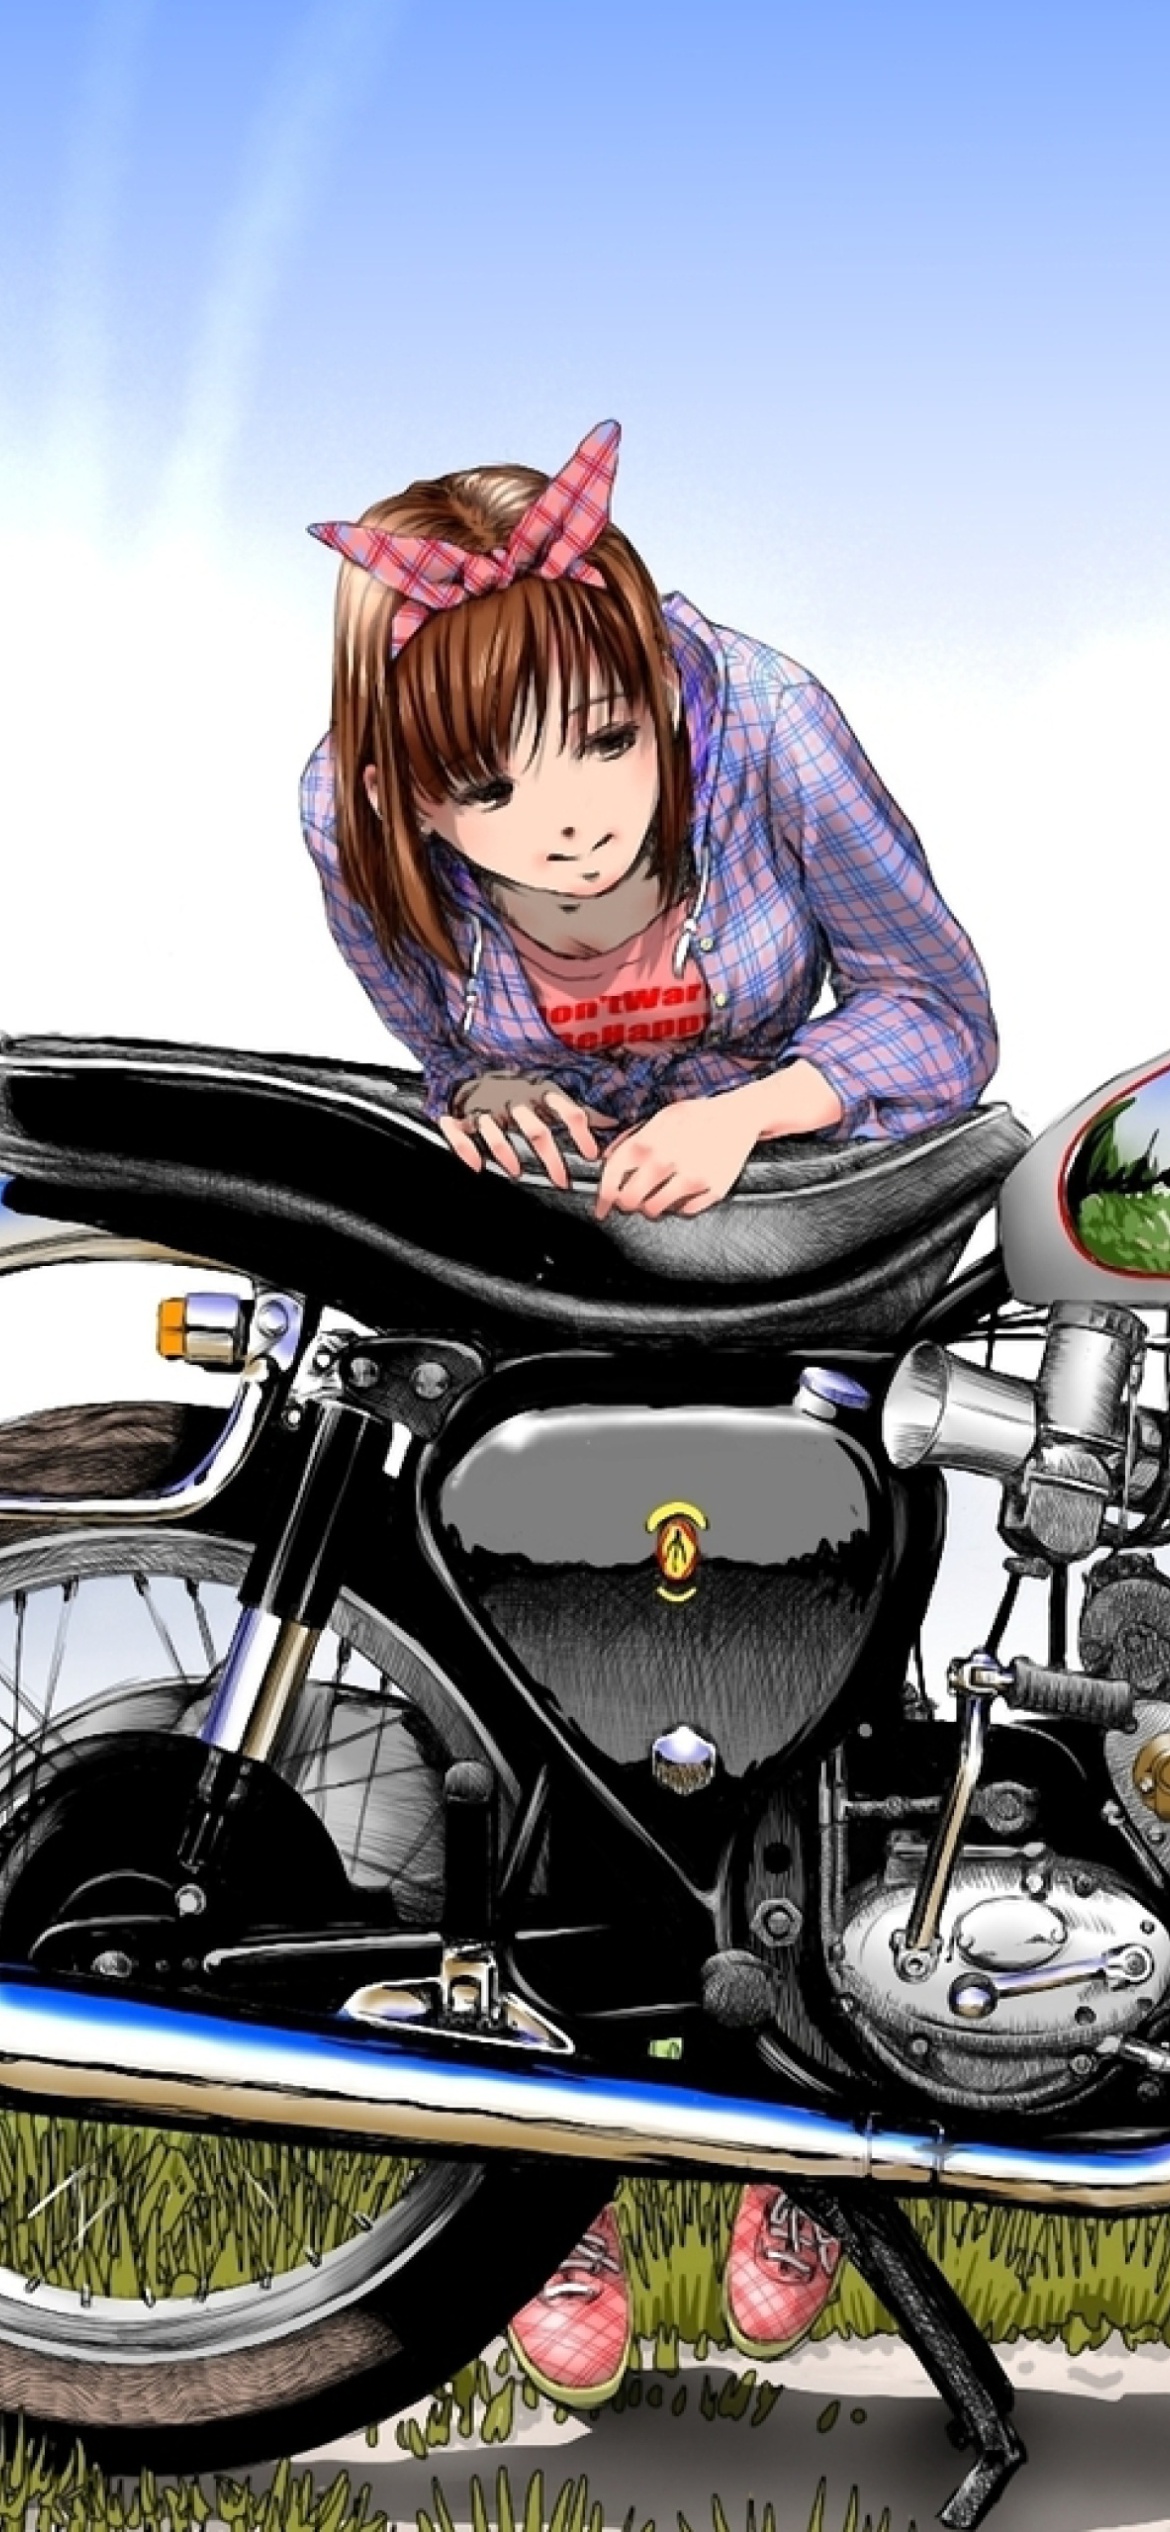 Fondo de pantalla Anime Girl with Bike 1170x2532